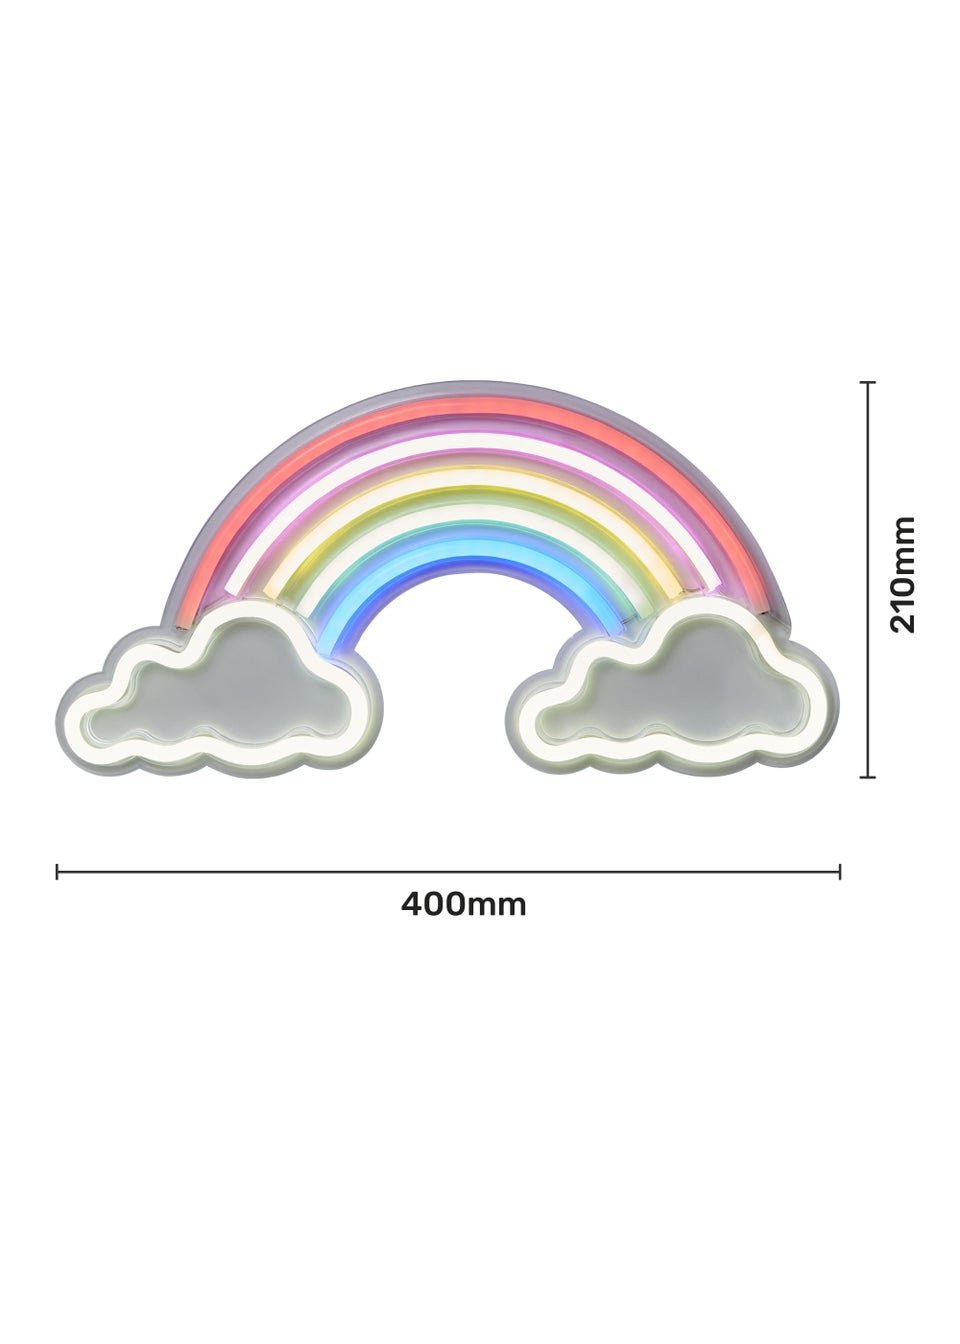 Glow Rainbow & Cloud Neon Light (20cm x 40cm x 2cm)